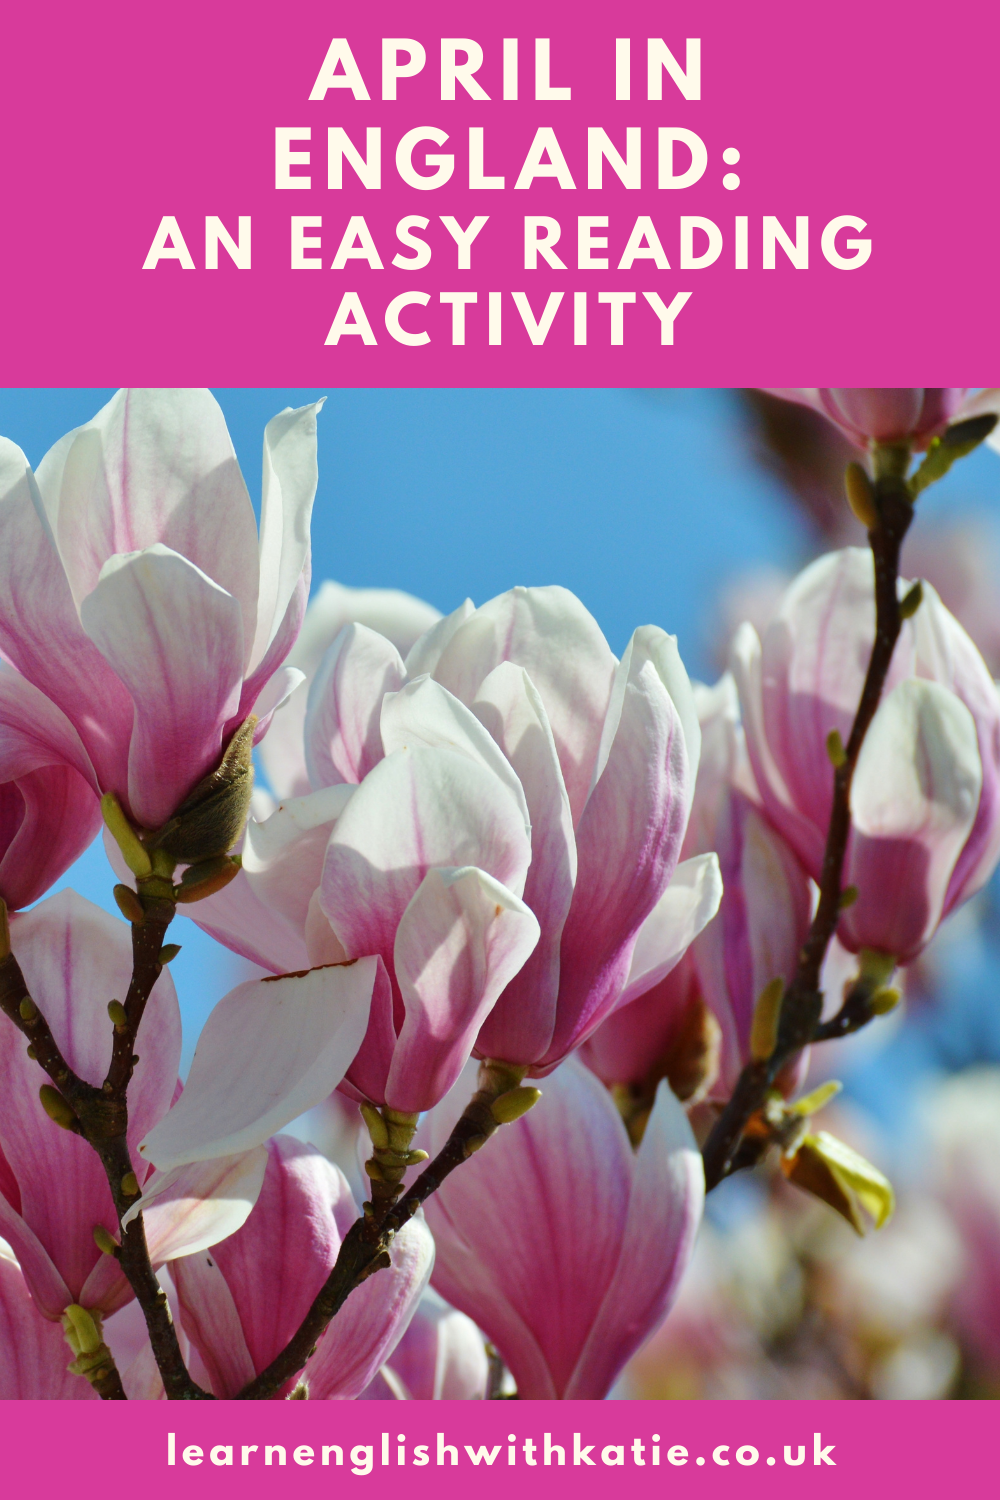 Pinterest image showing magnolia flowers.